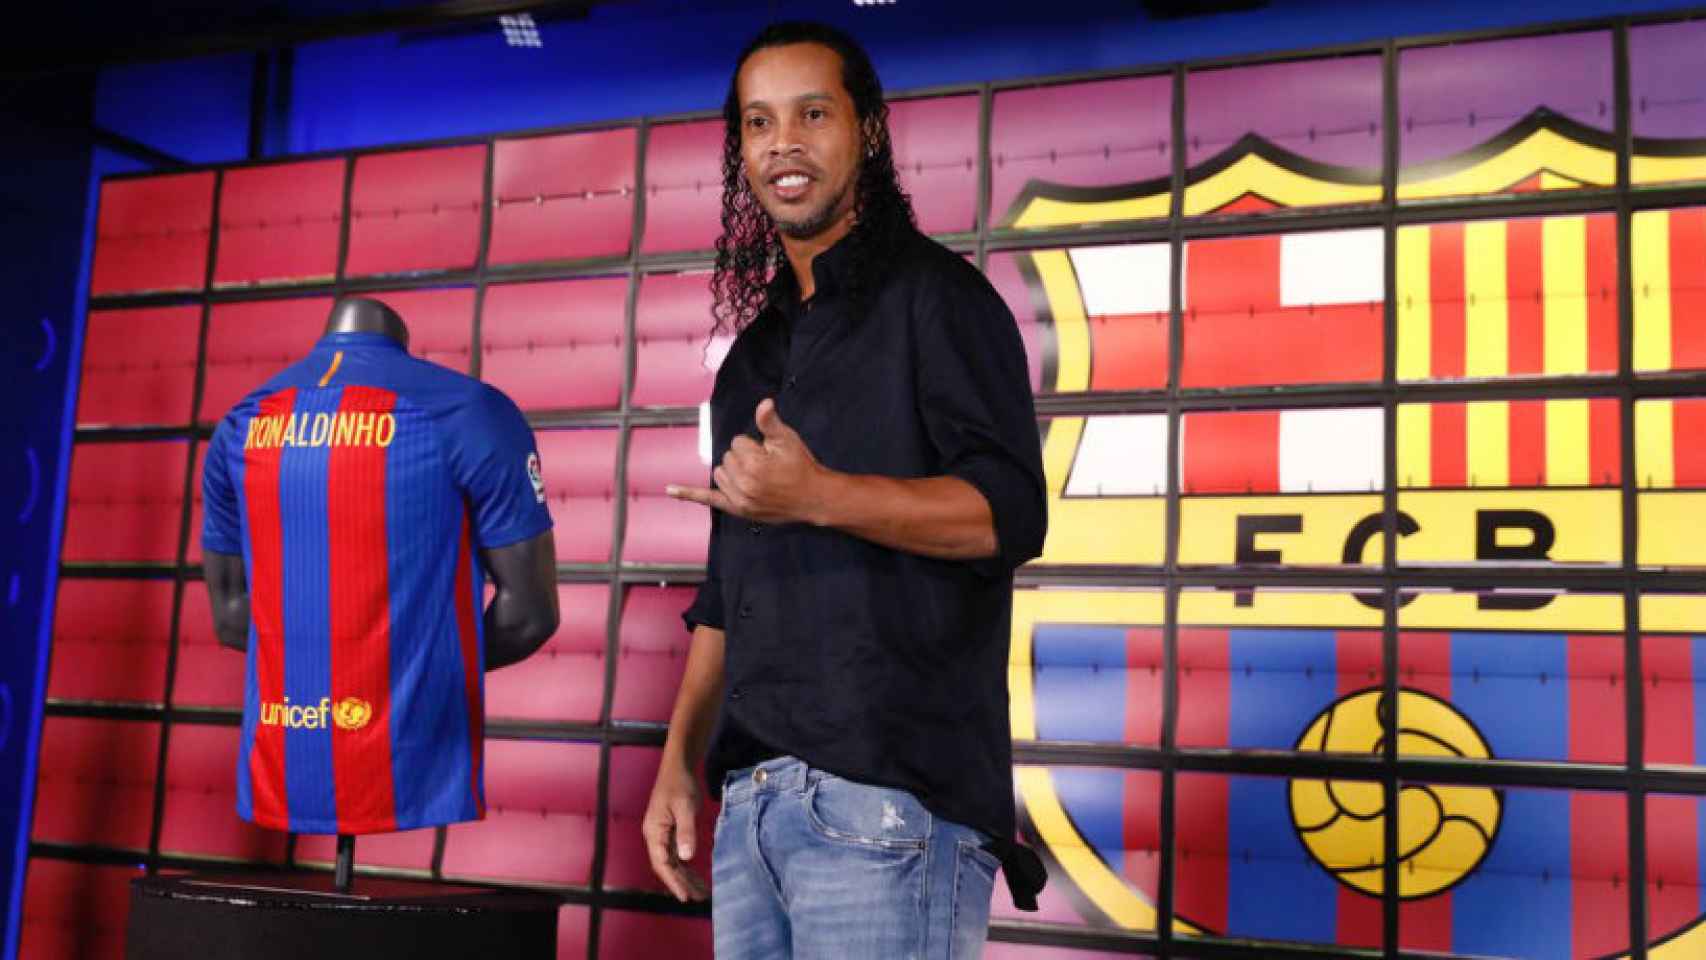 Ronaldinho, en su vuelta al Barcelona. Foto: fcbarcelona.com